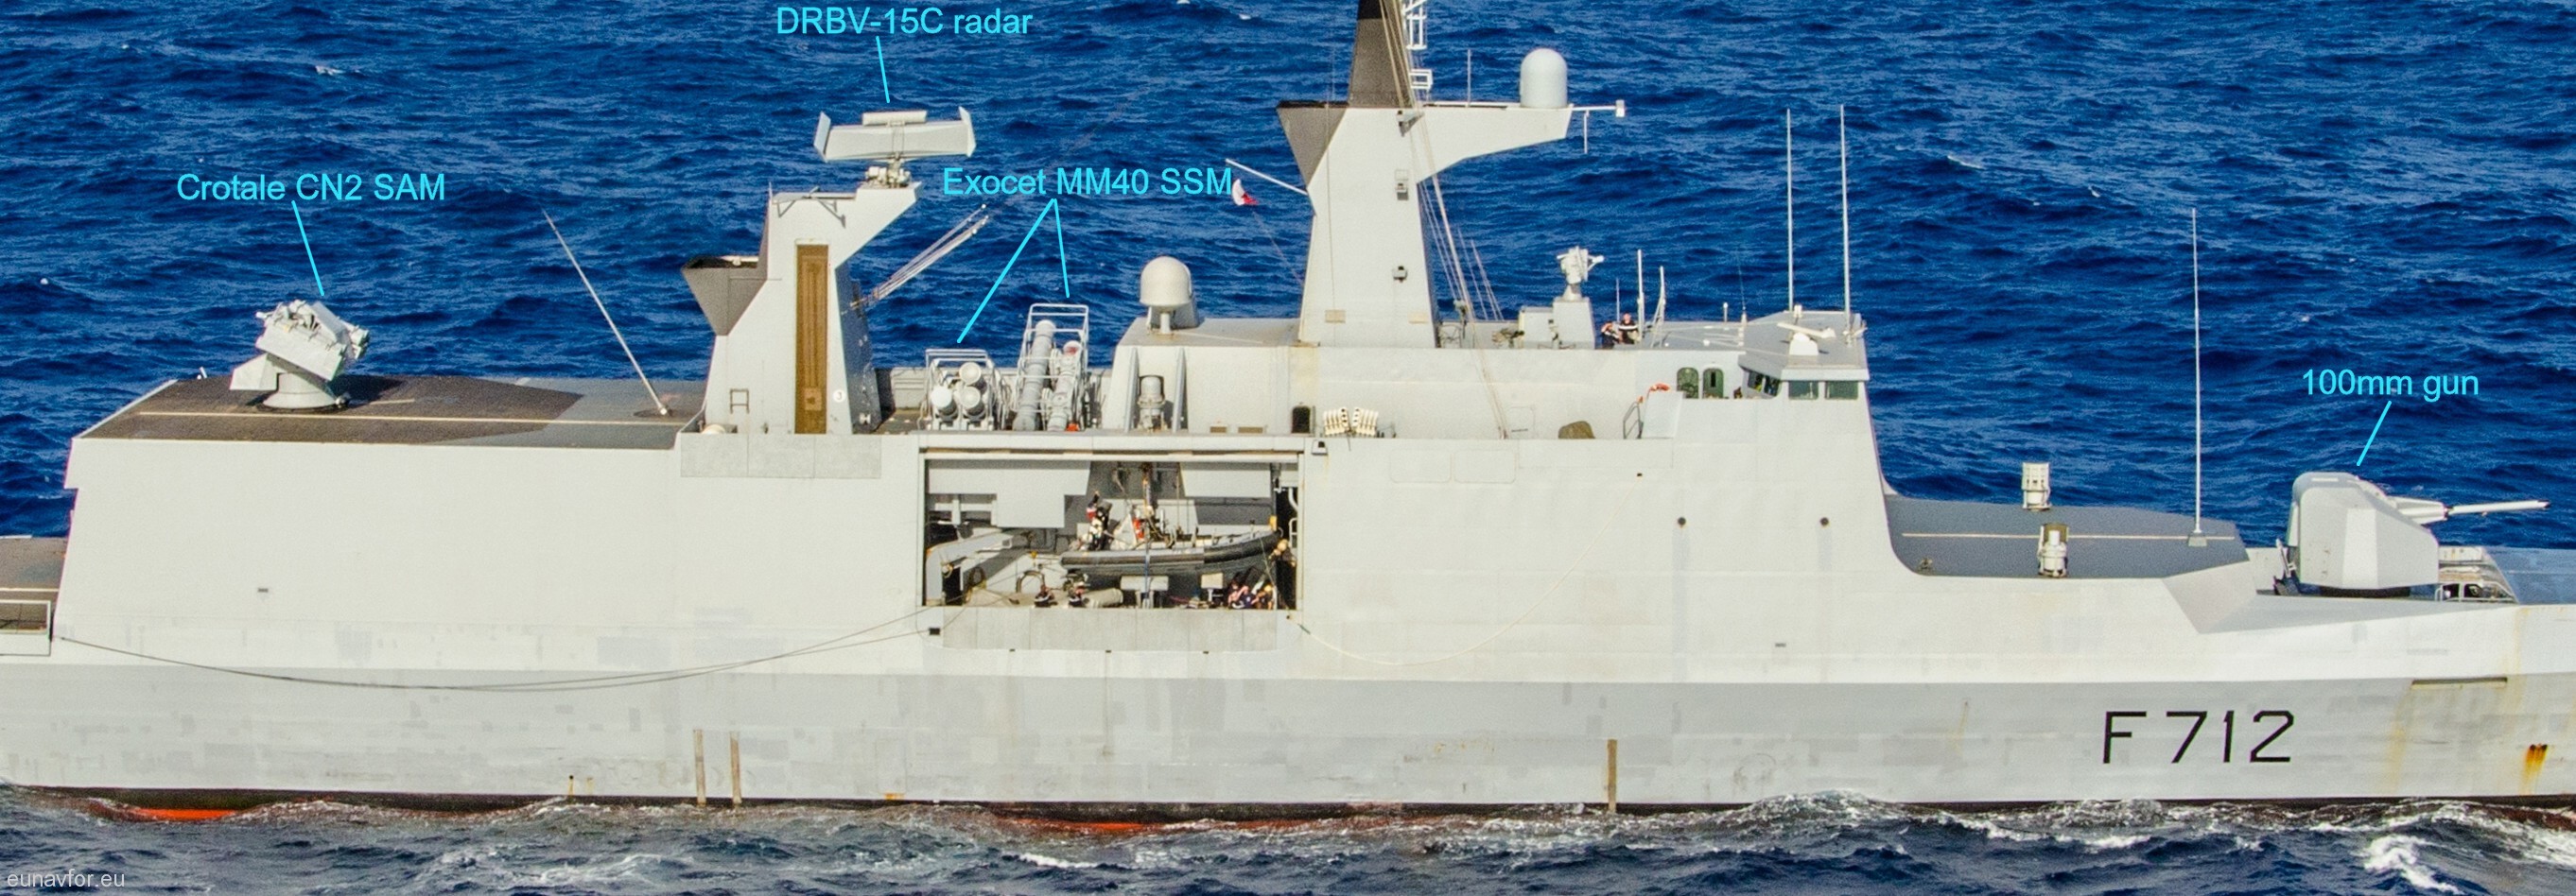 la fayette class frigate french navy marine nationale crotale cn2 sam exocet mm40 ssm missile 100mm gun armament